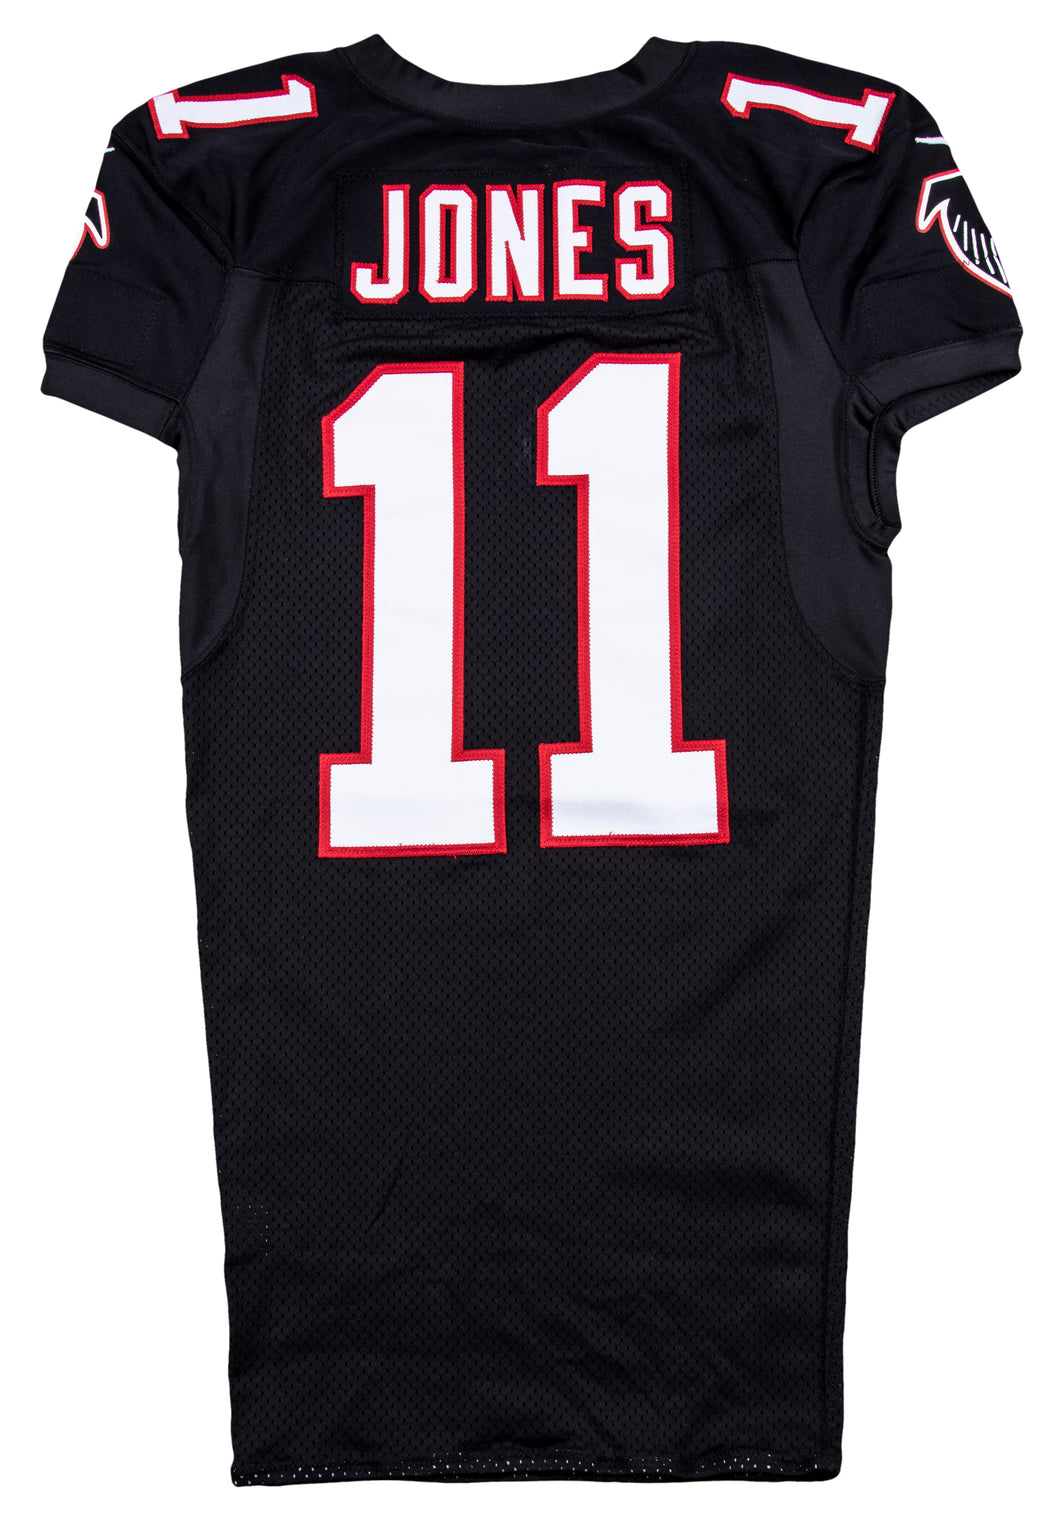 2012 Julio Jones Game Used Atlanta Falcons Black Alternate Jersey